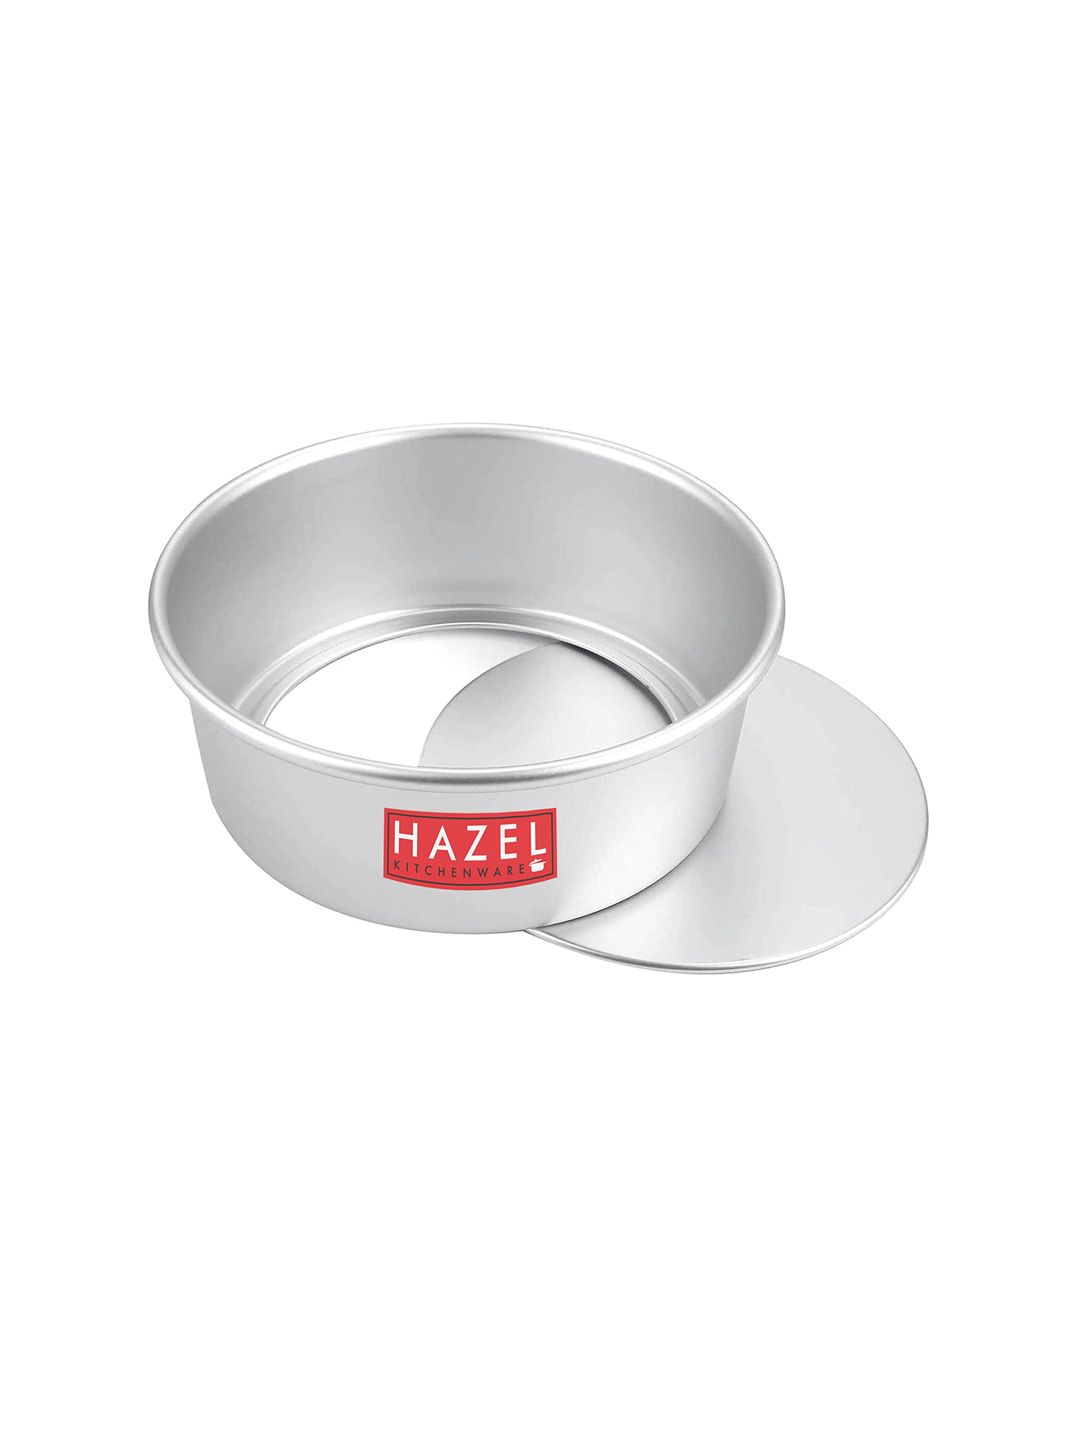 HAZEL Silver-Toned Aluminium Detachable Cake Mould Price in India